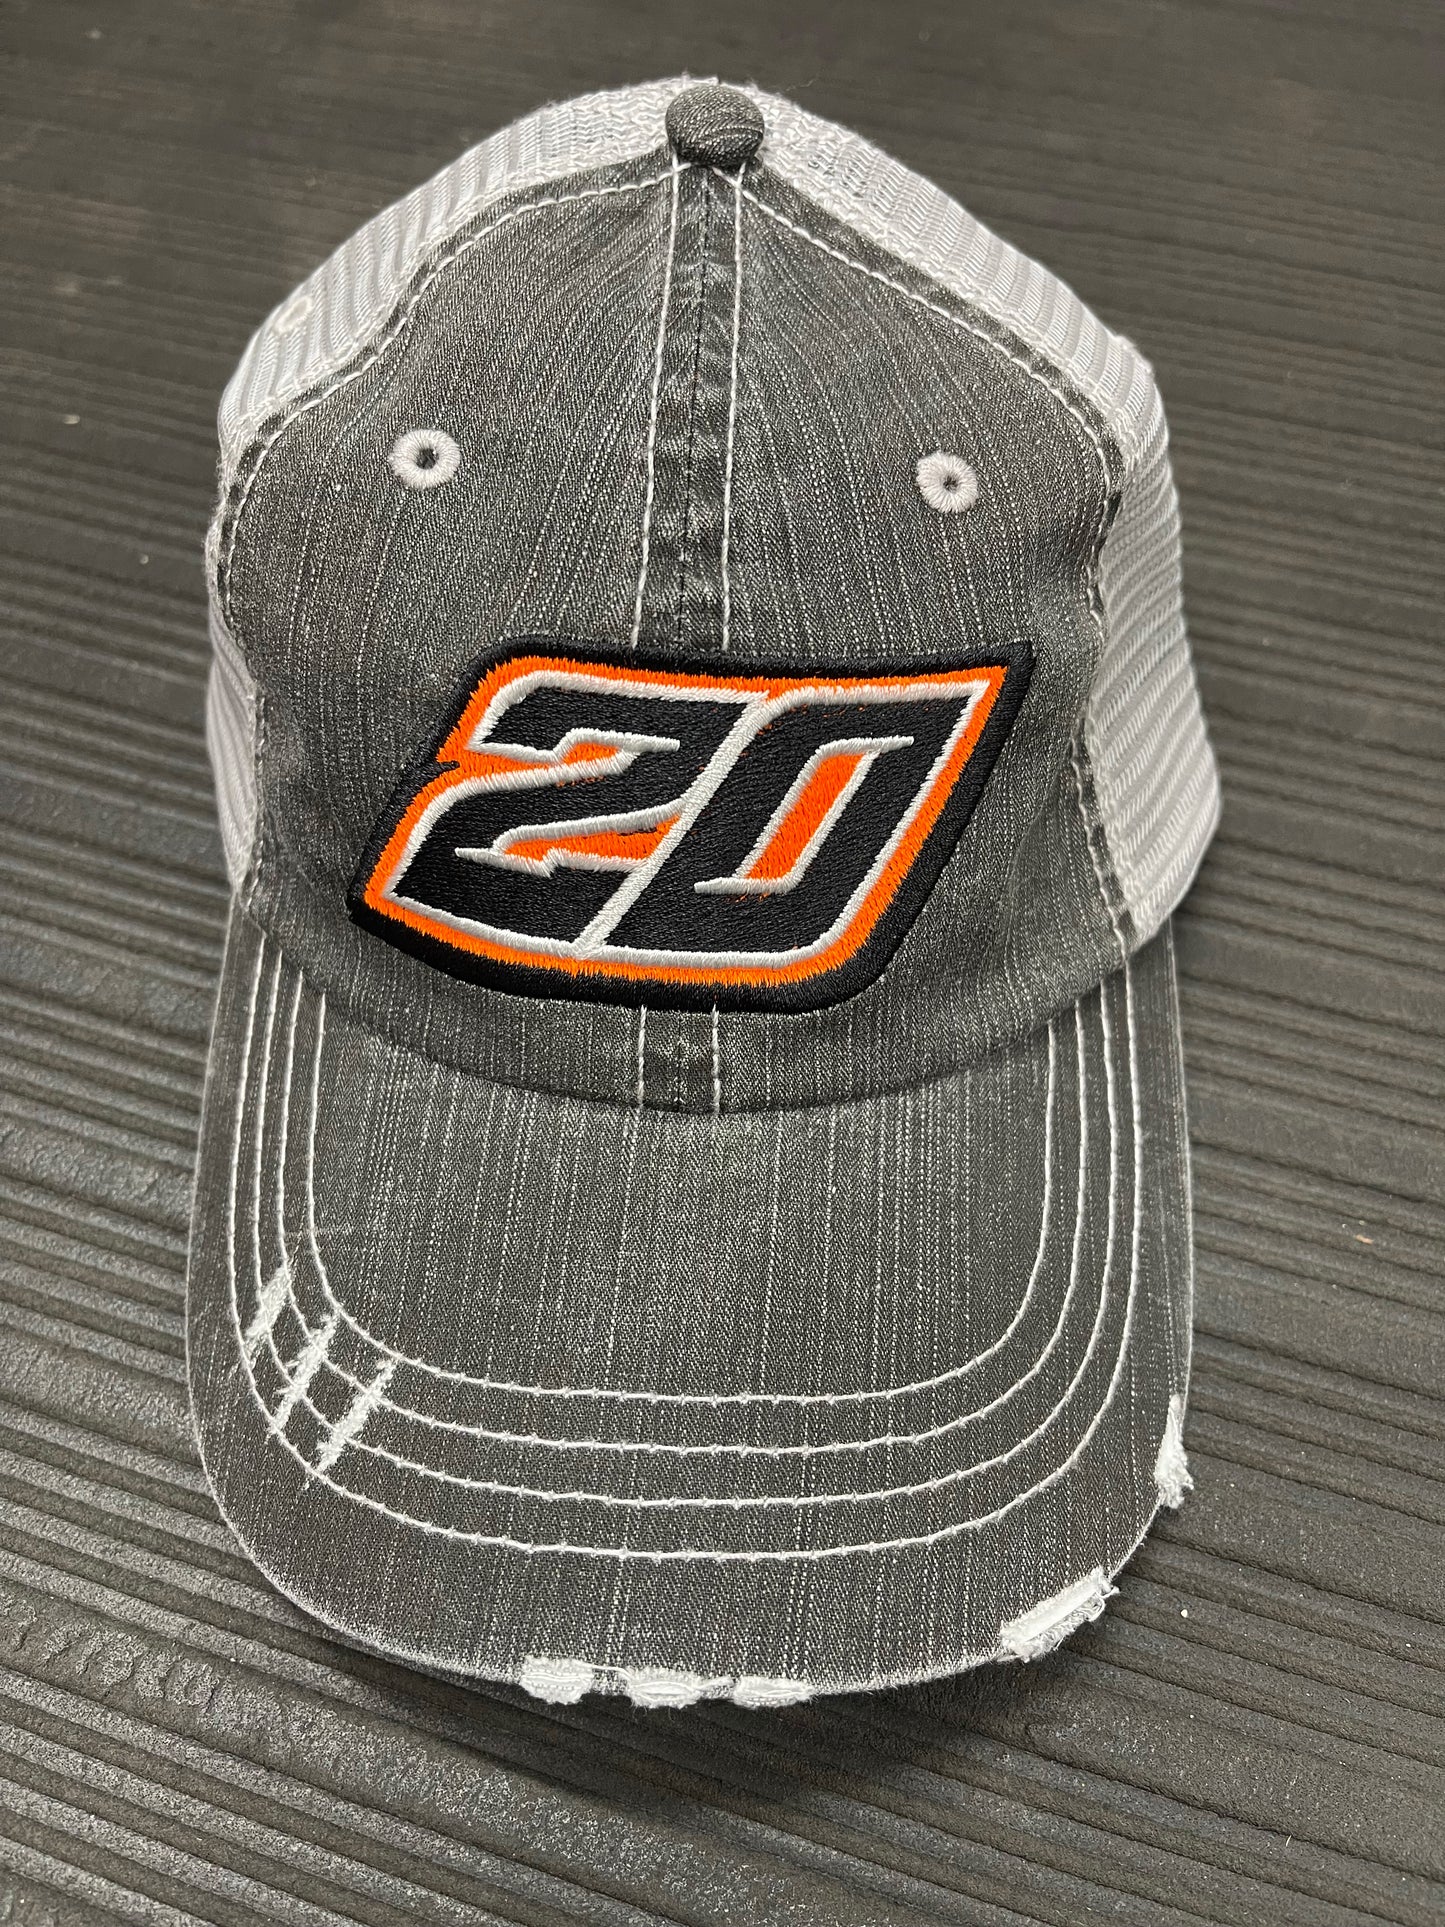 H2309GG - Gray / Gray Mesh #20 Number Trucker Hat